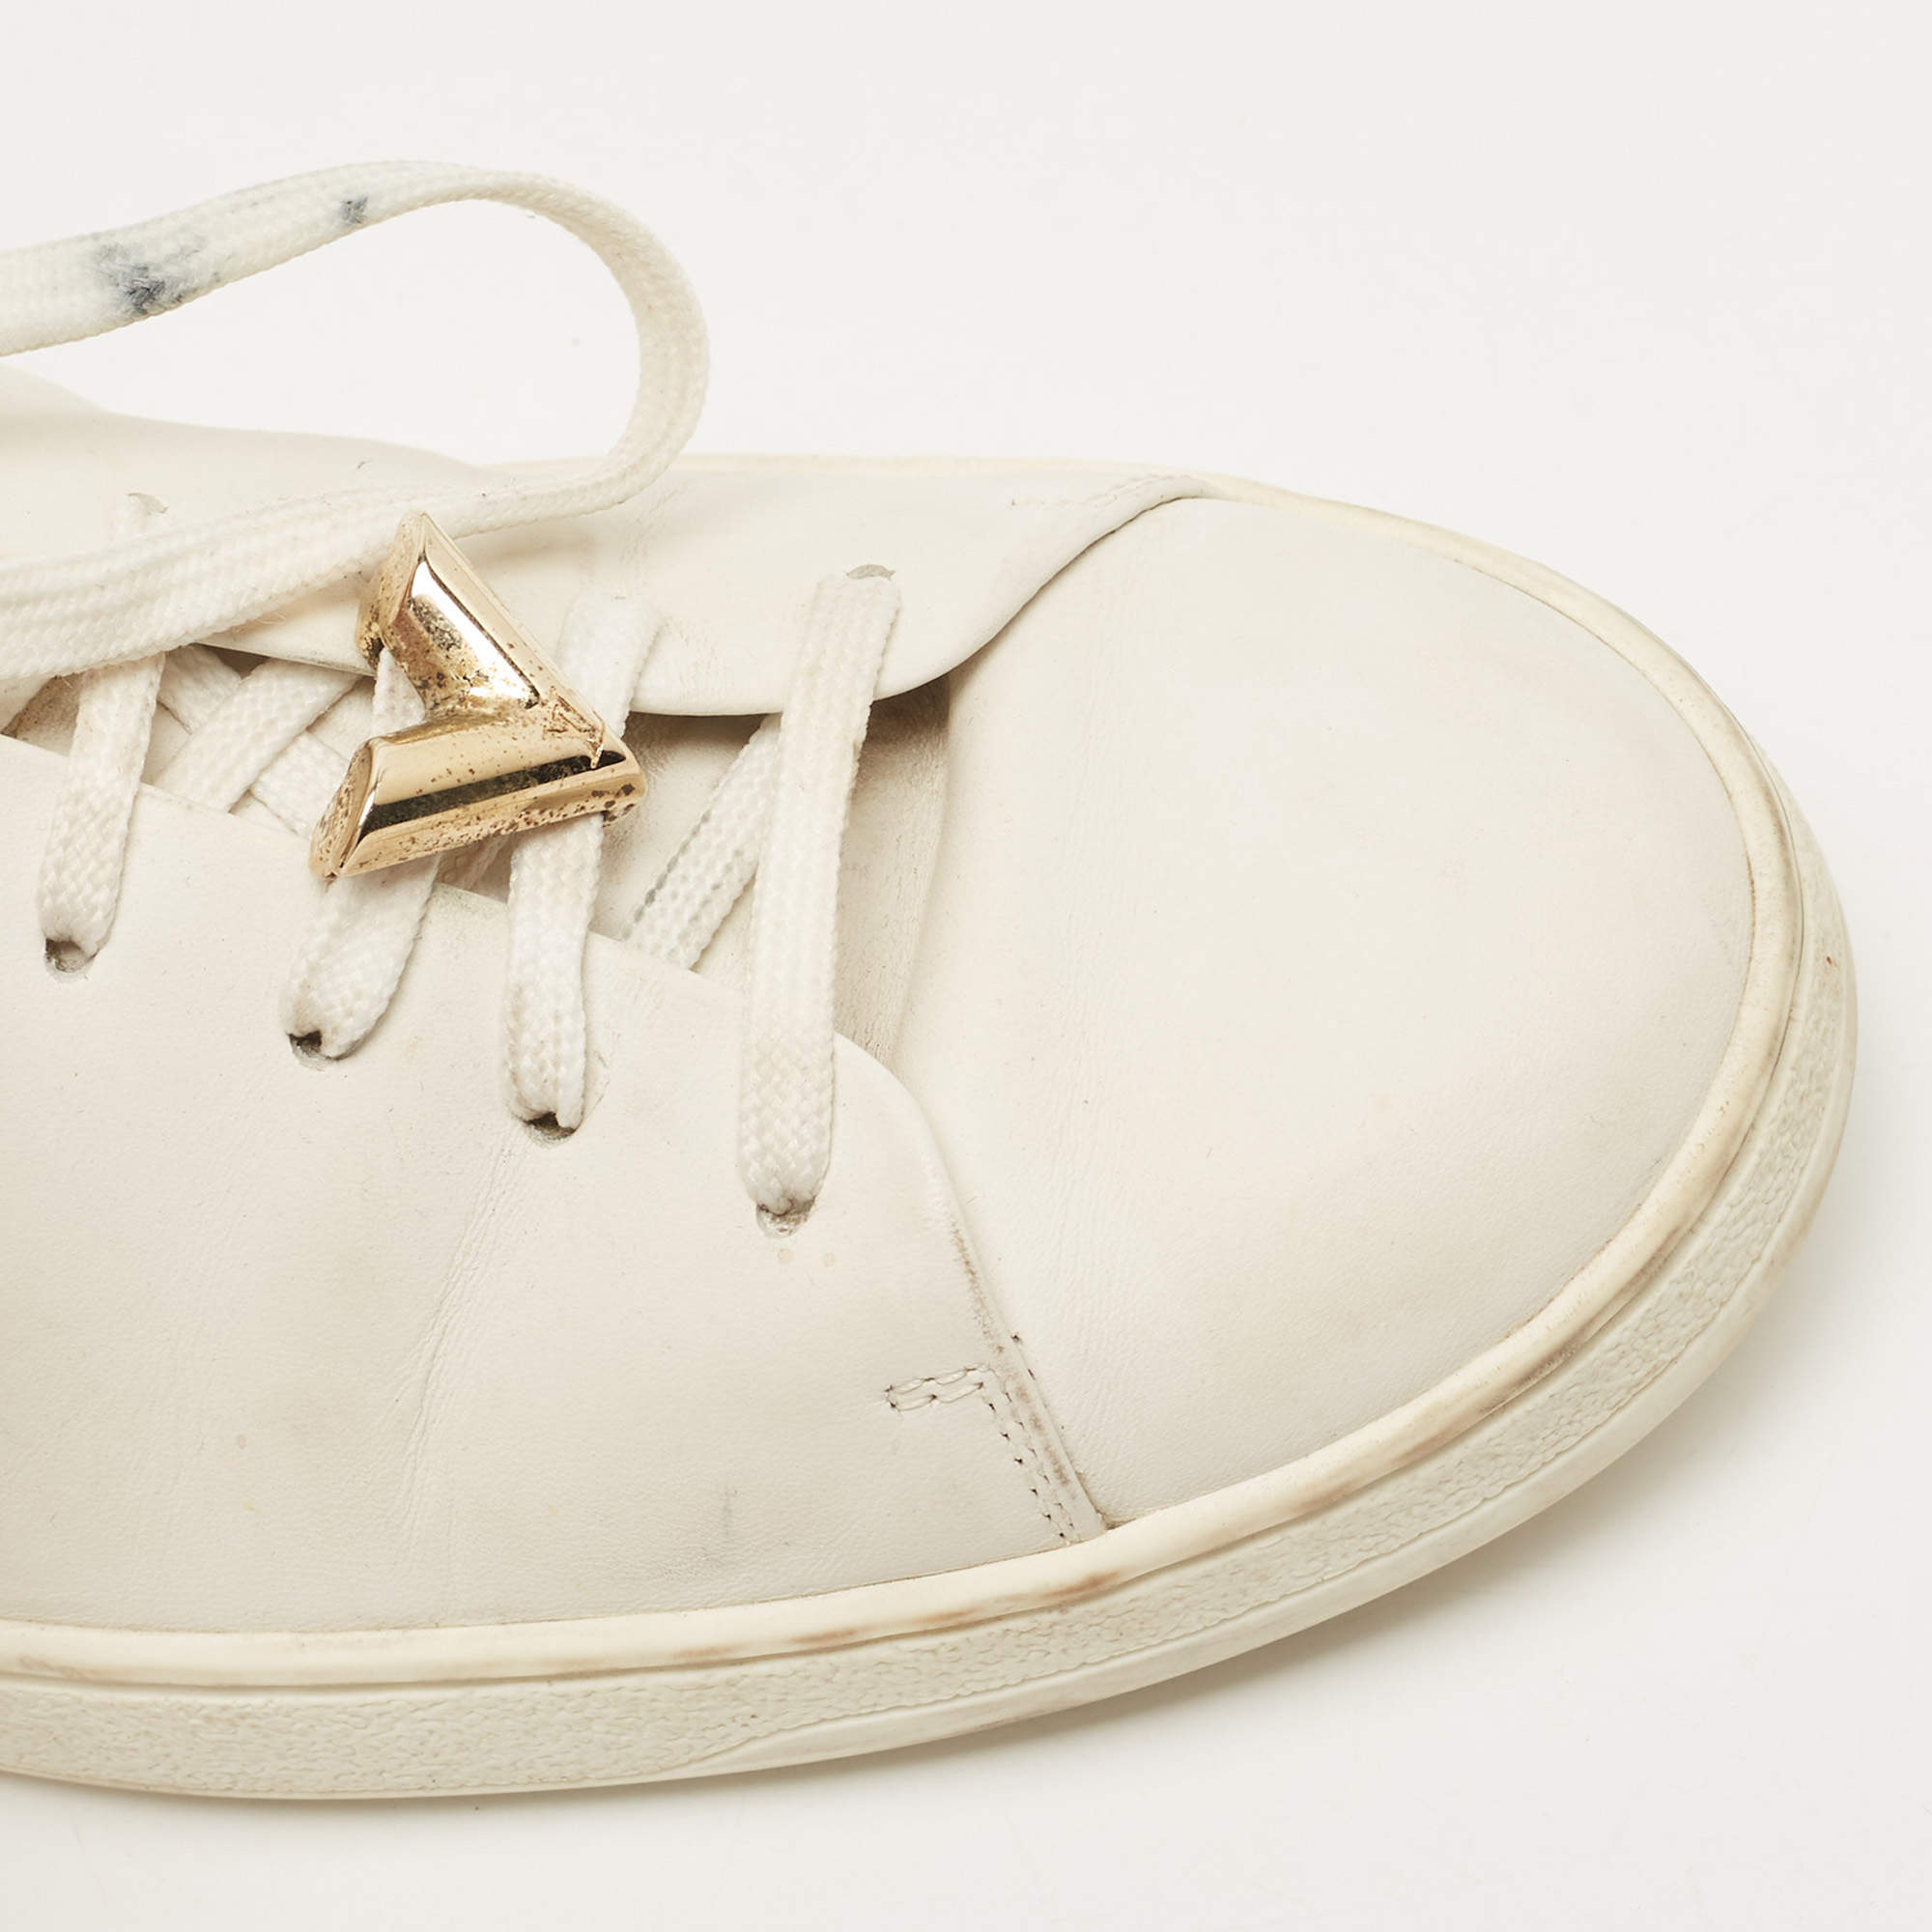 Louis Vuitton® Frontrow Sneaker White. Size 34.0 in 2023  Womens shoes  sneakers, White shoes women, Sneakers white